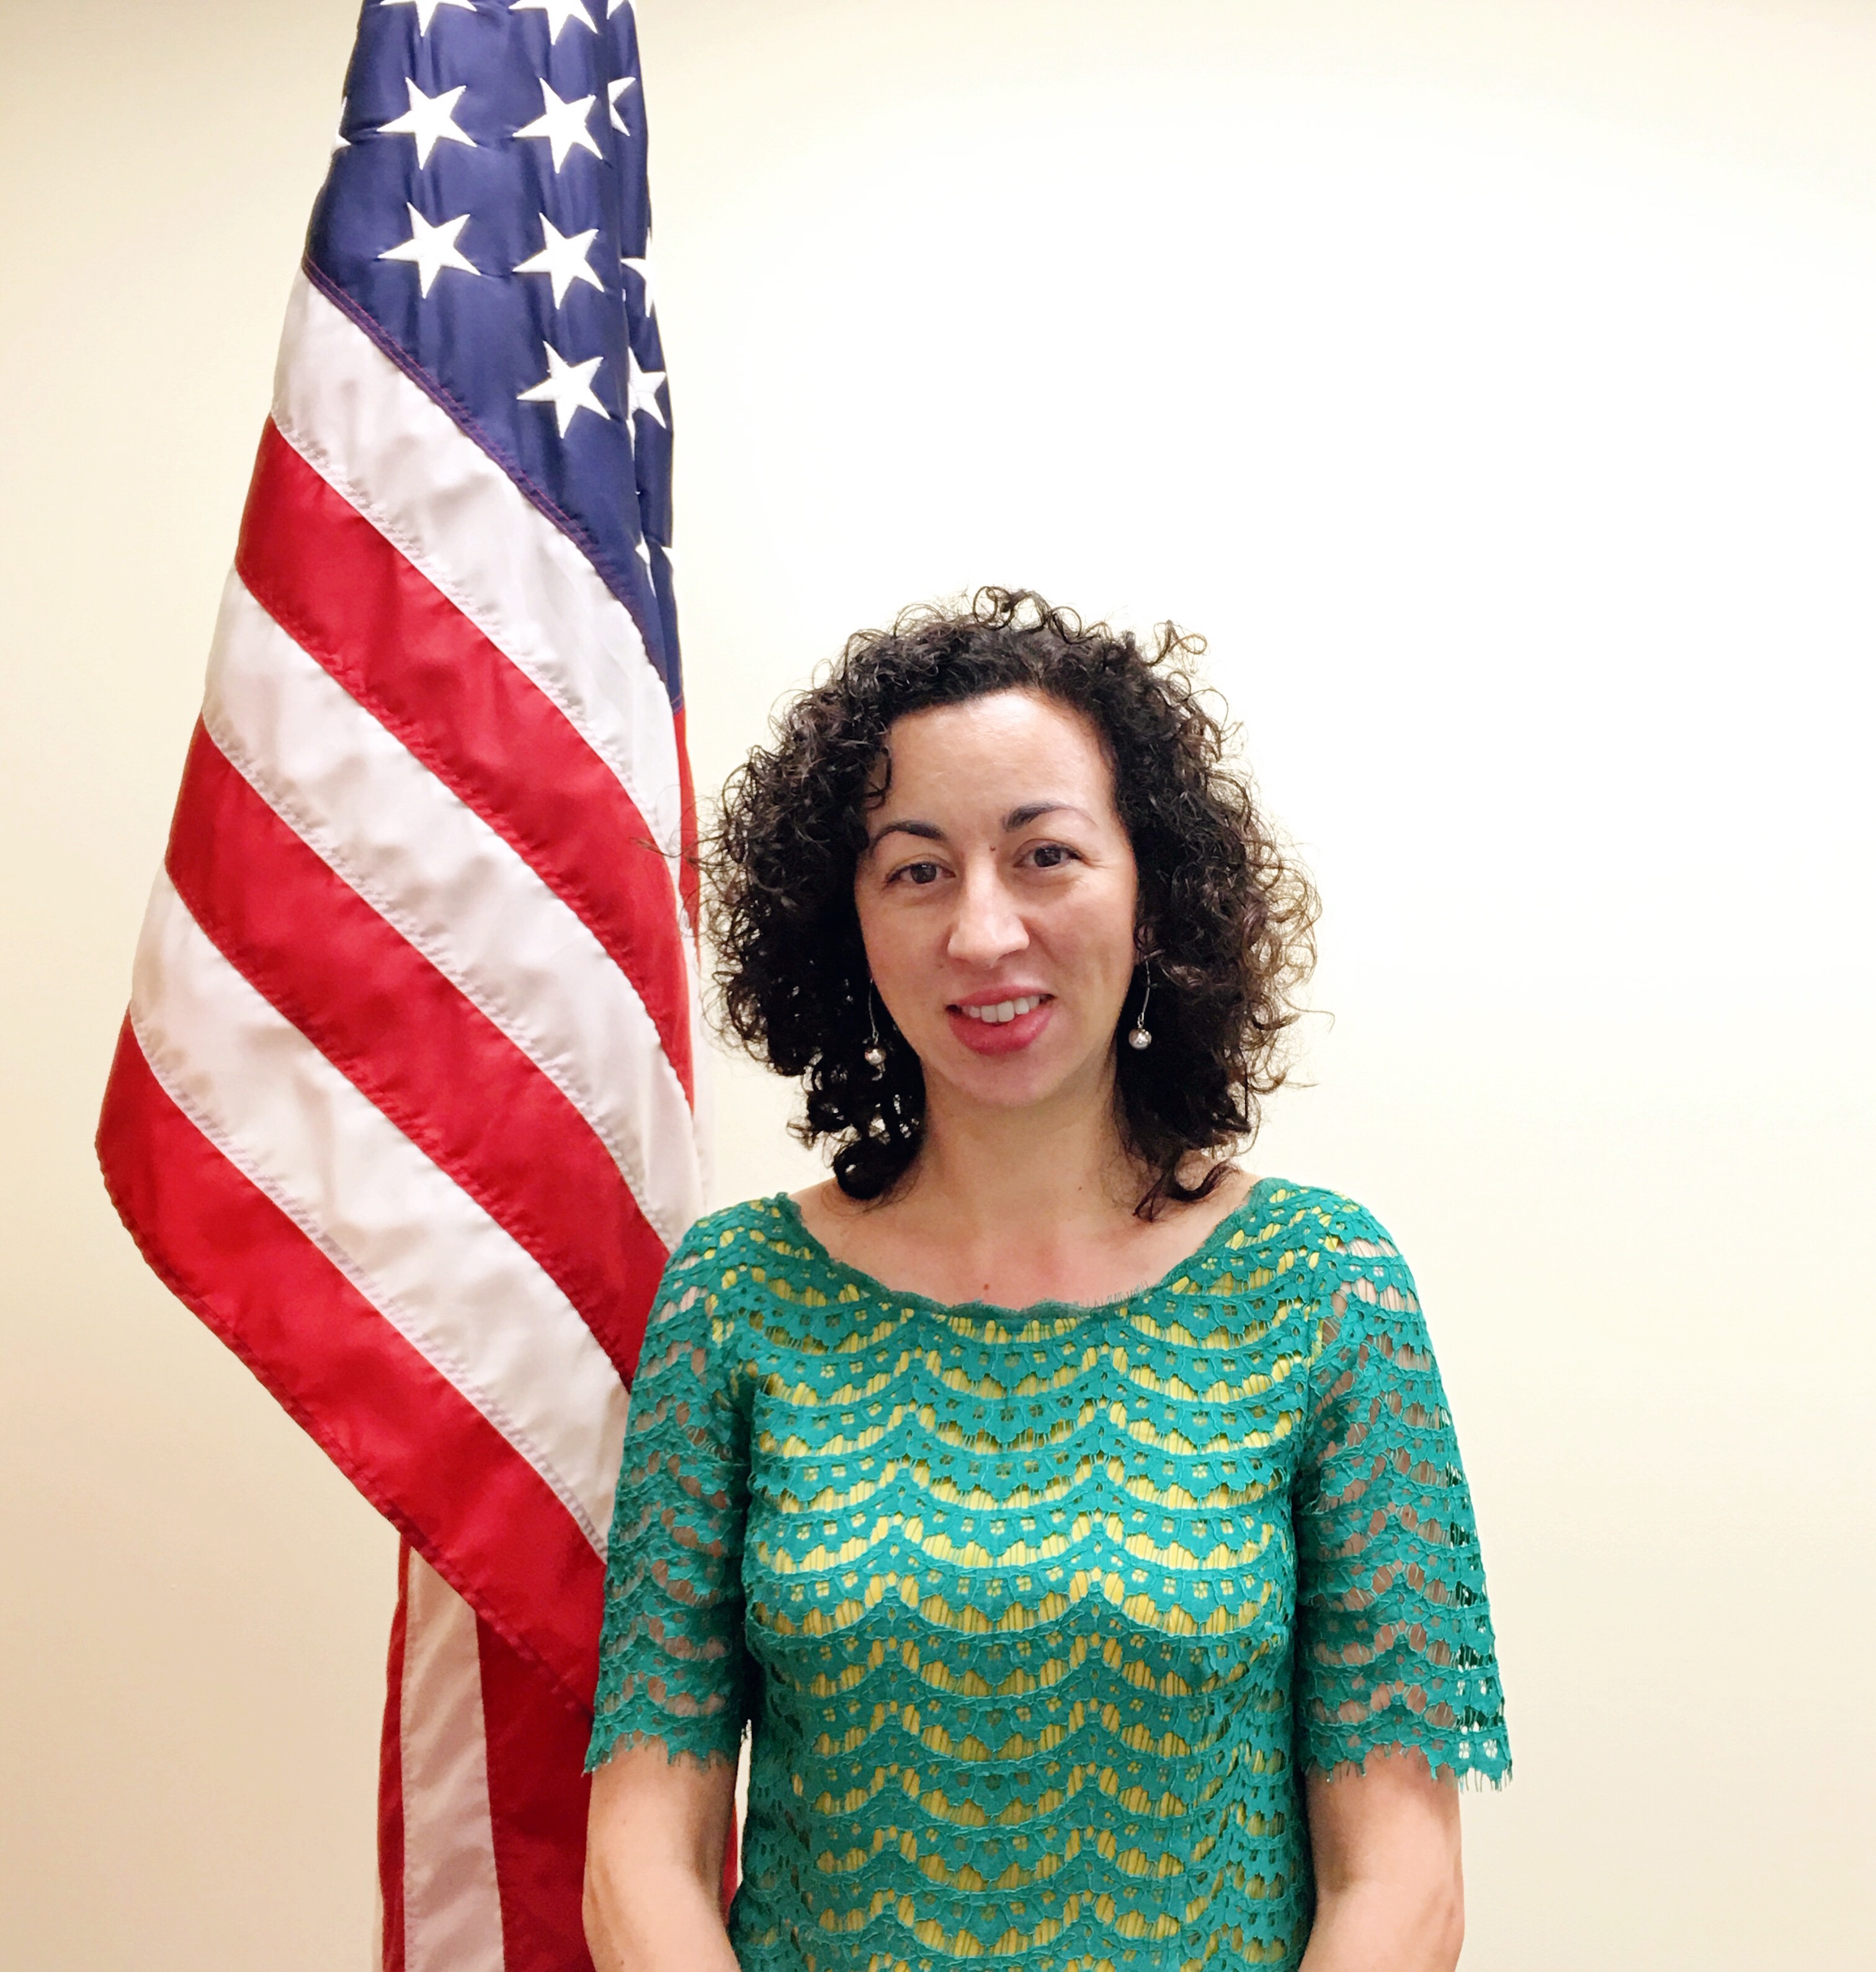 Dr. Zennia Paganini, the US Cultural Attaché